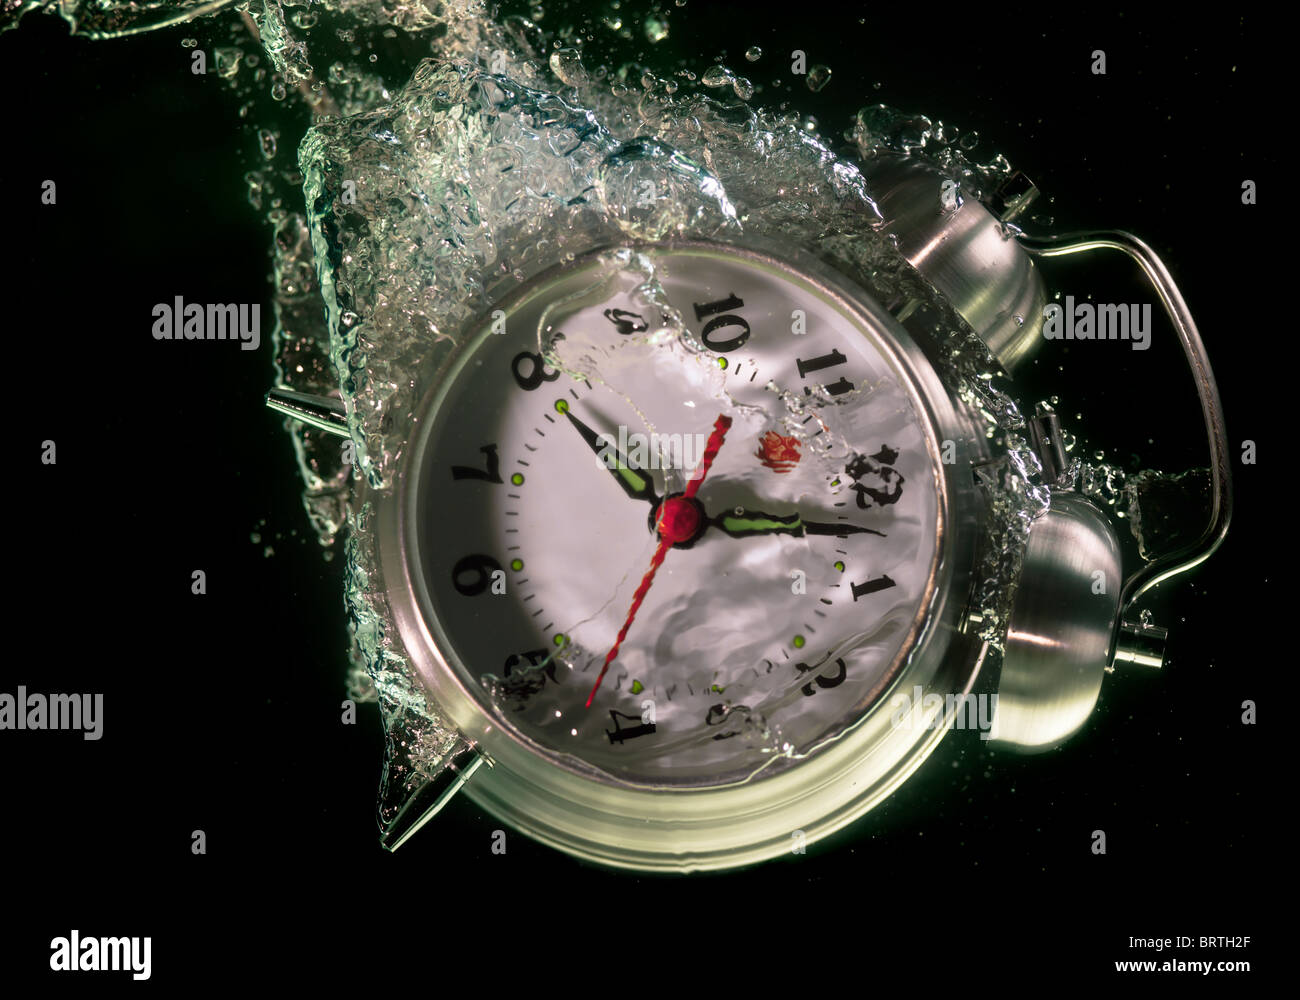 Alarm clock sinks underwater Stock Photo